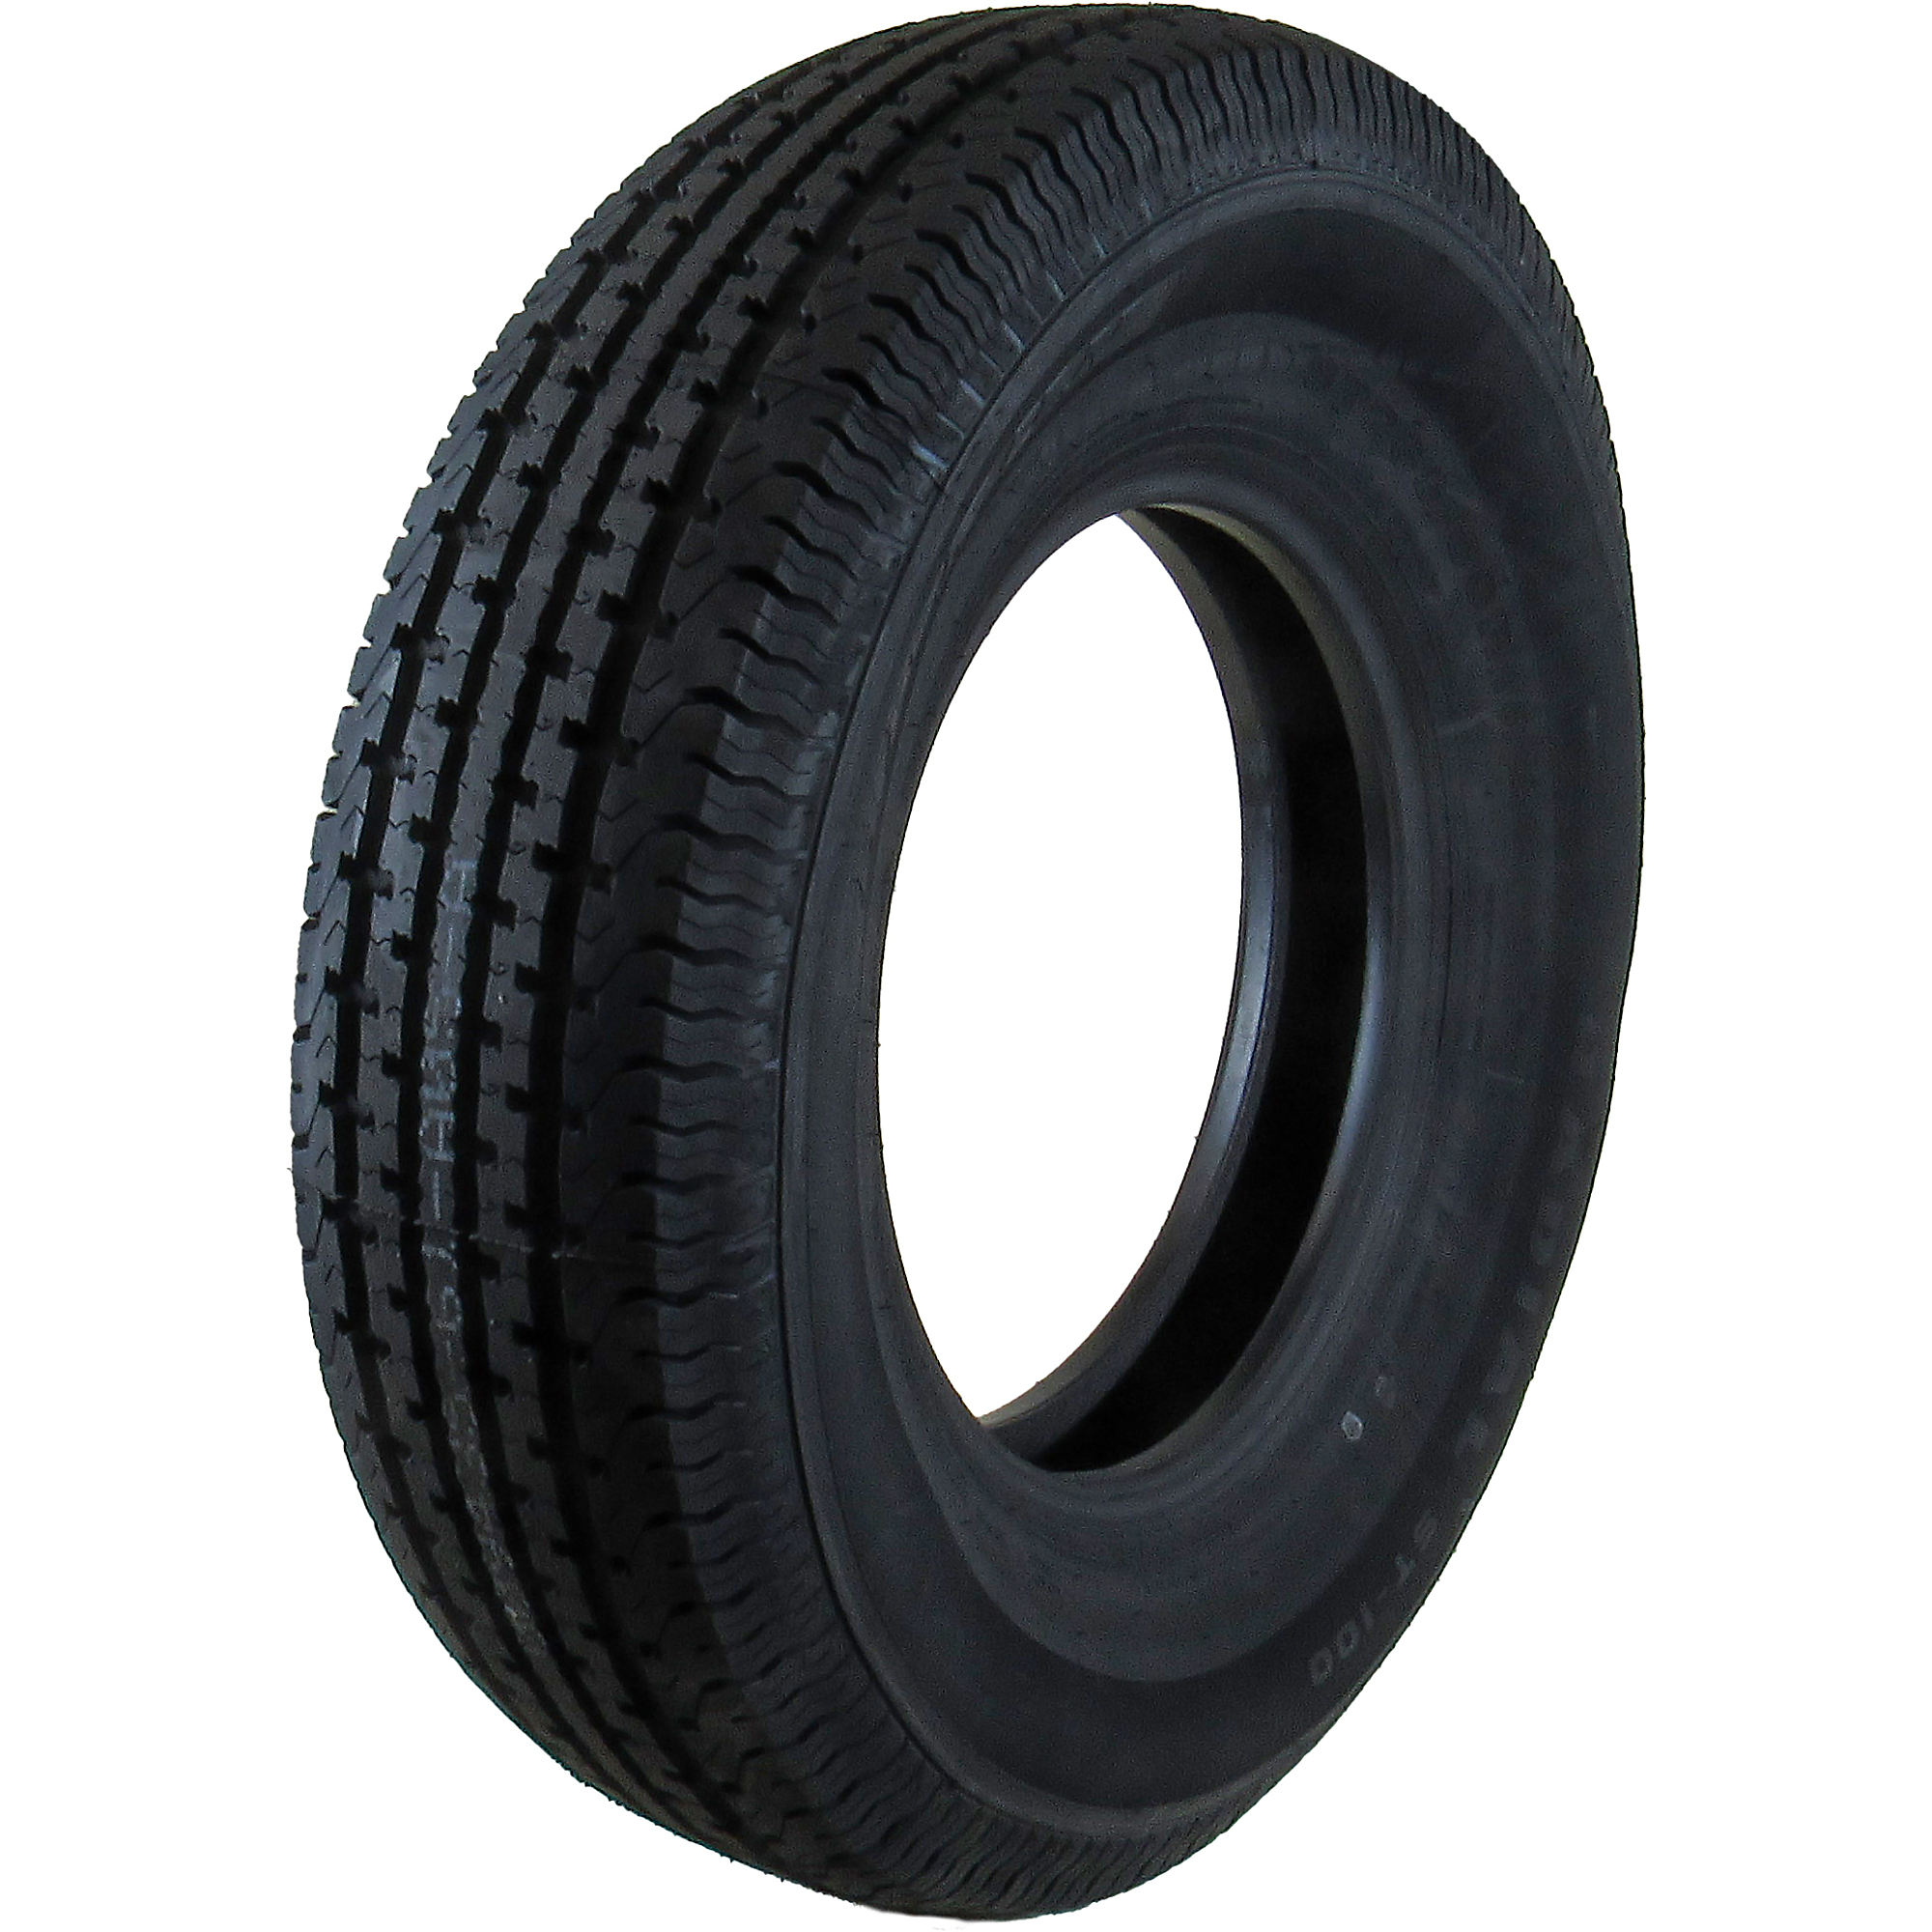 HI-RUN, Highway Trailer Tire, Radial-ply, Tire Size ST175/80R13 Load Range Rating C, Model HZT1001